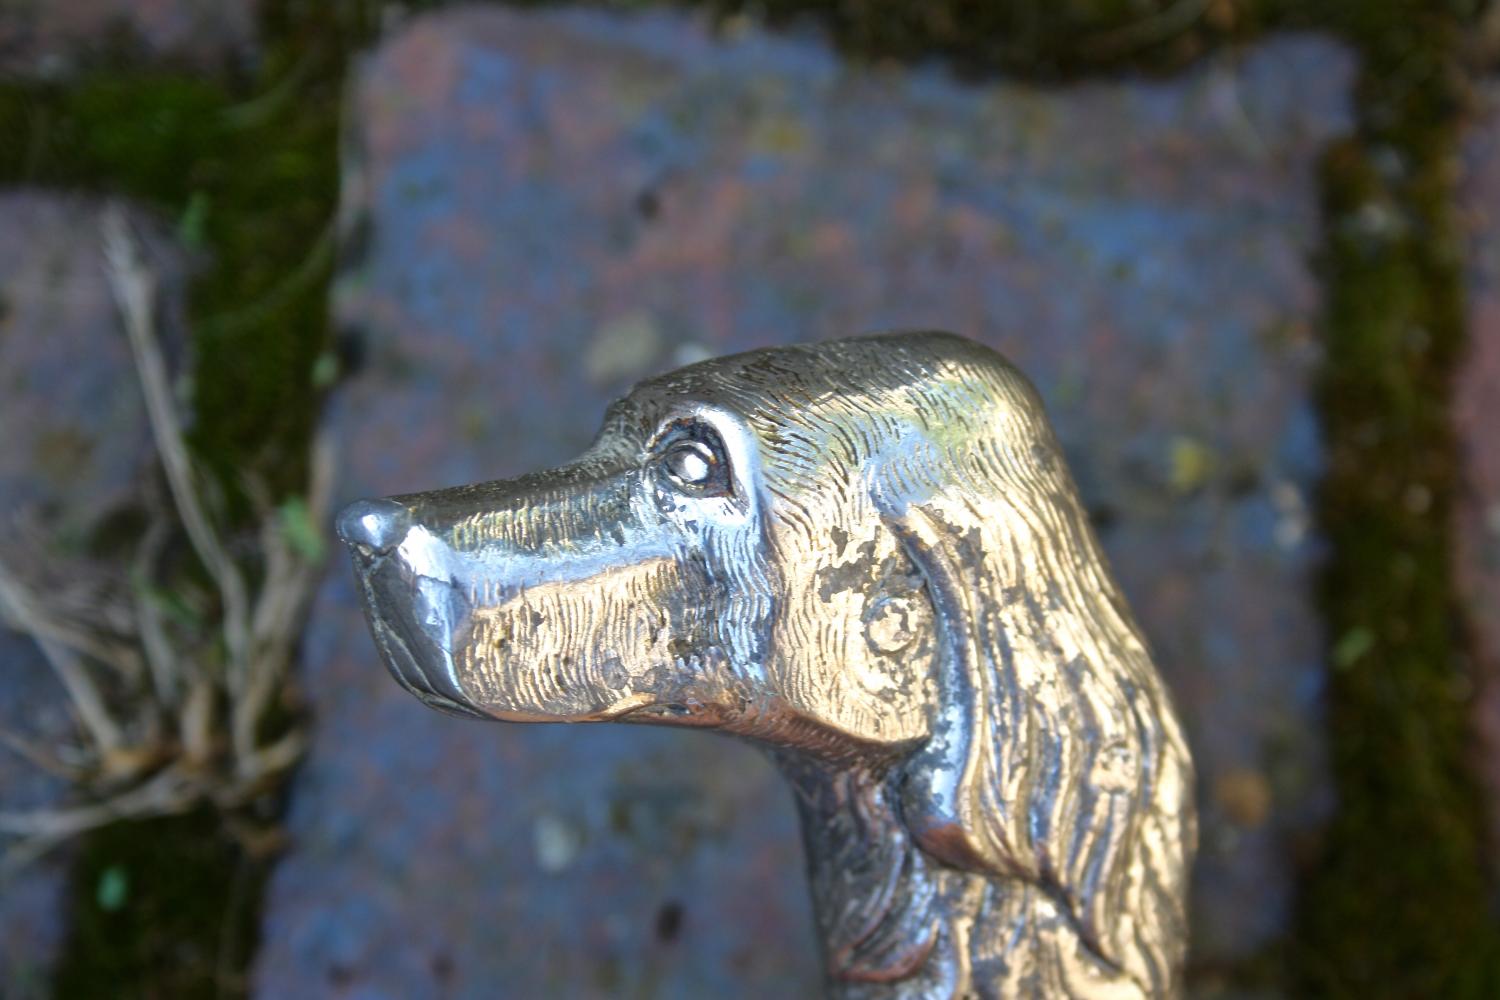 Silver dog bottle opener